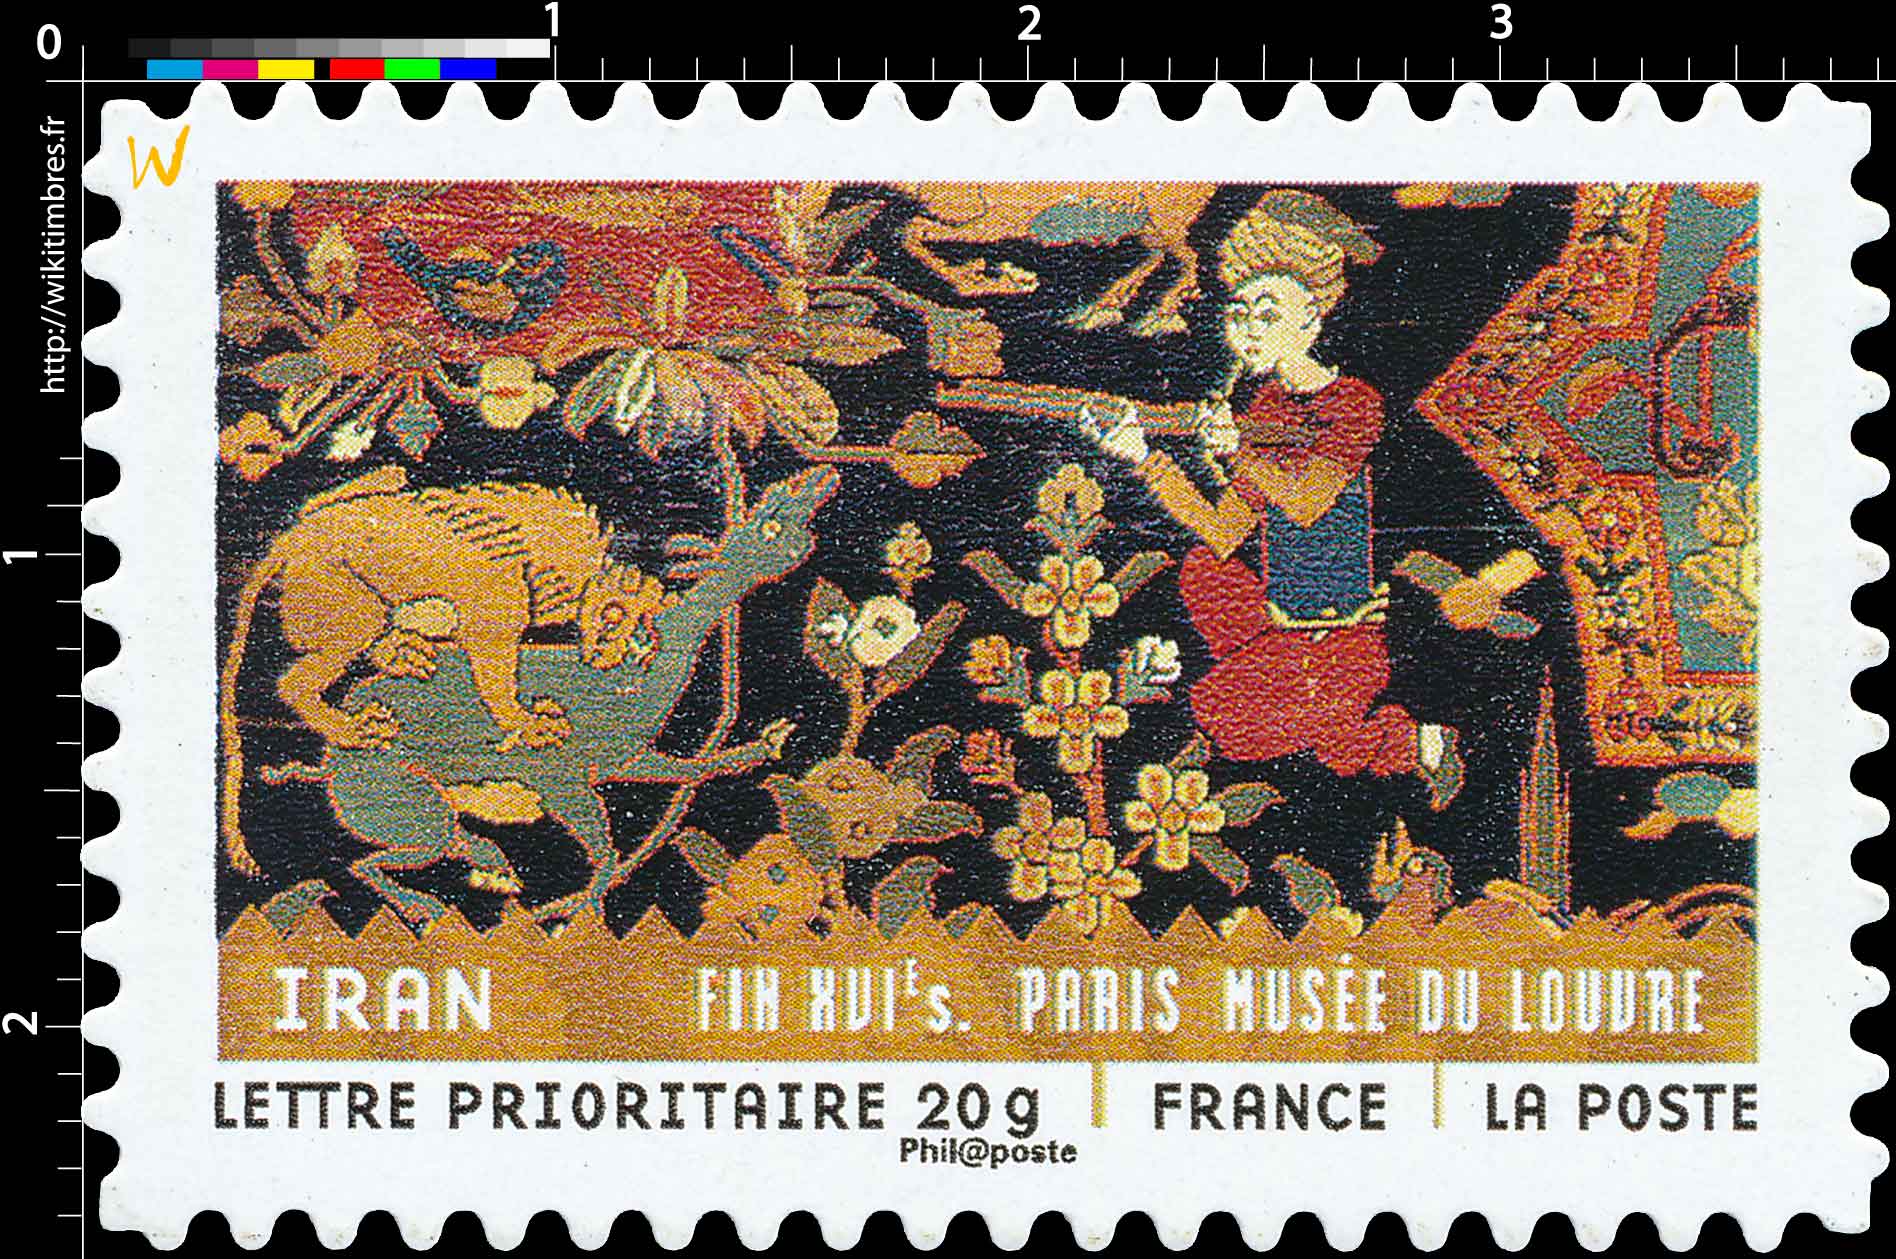 IRAN FIN XVIᵉ s. PARIS MUSÉE DU LOUVRE